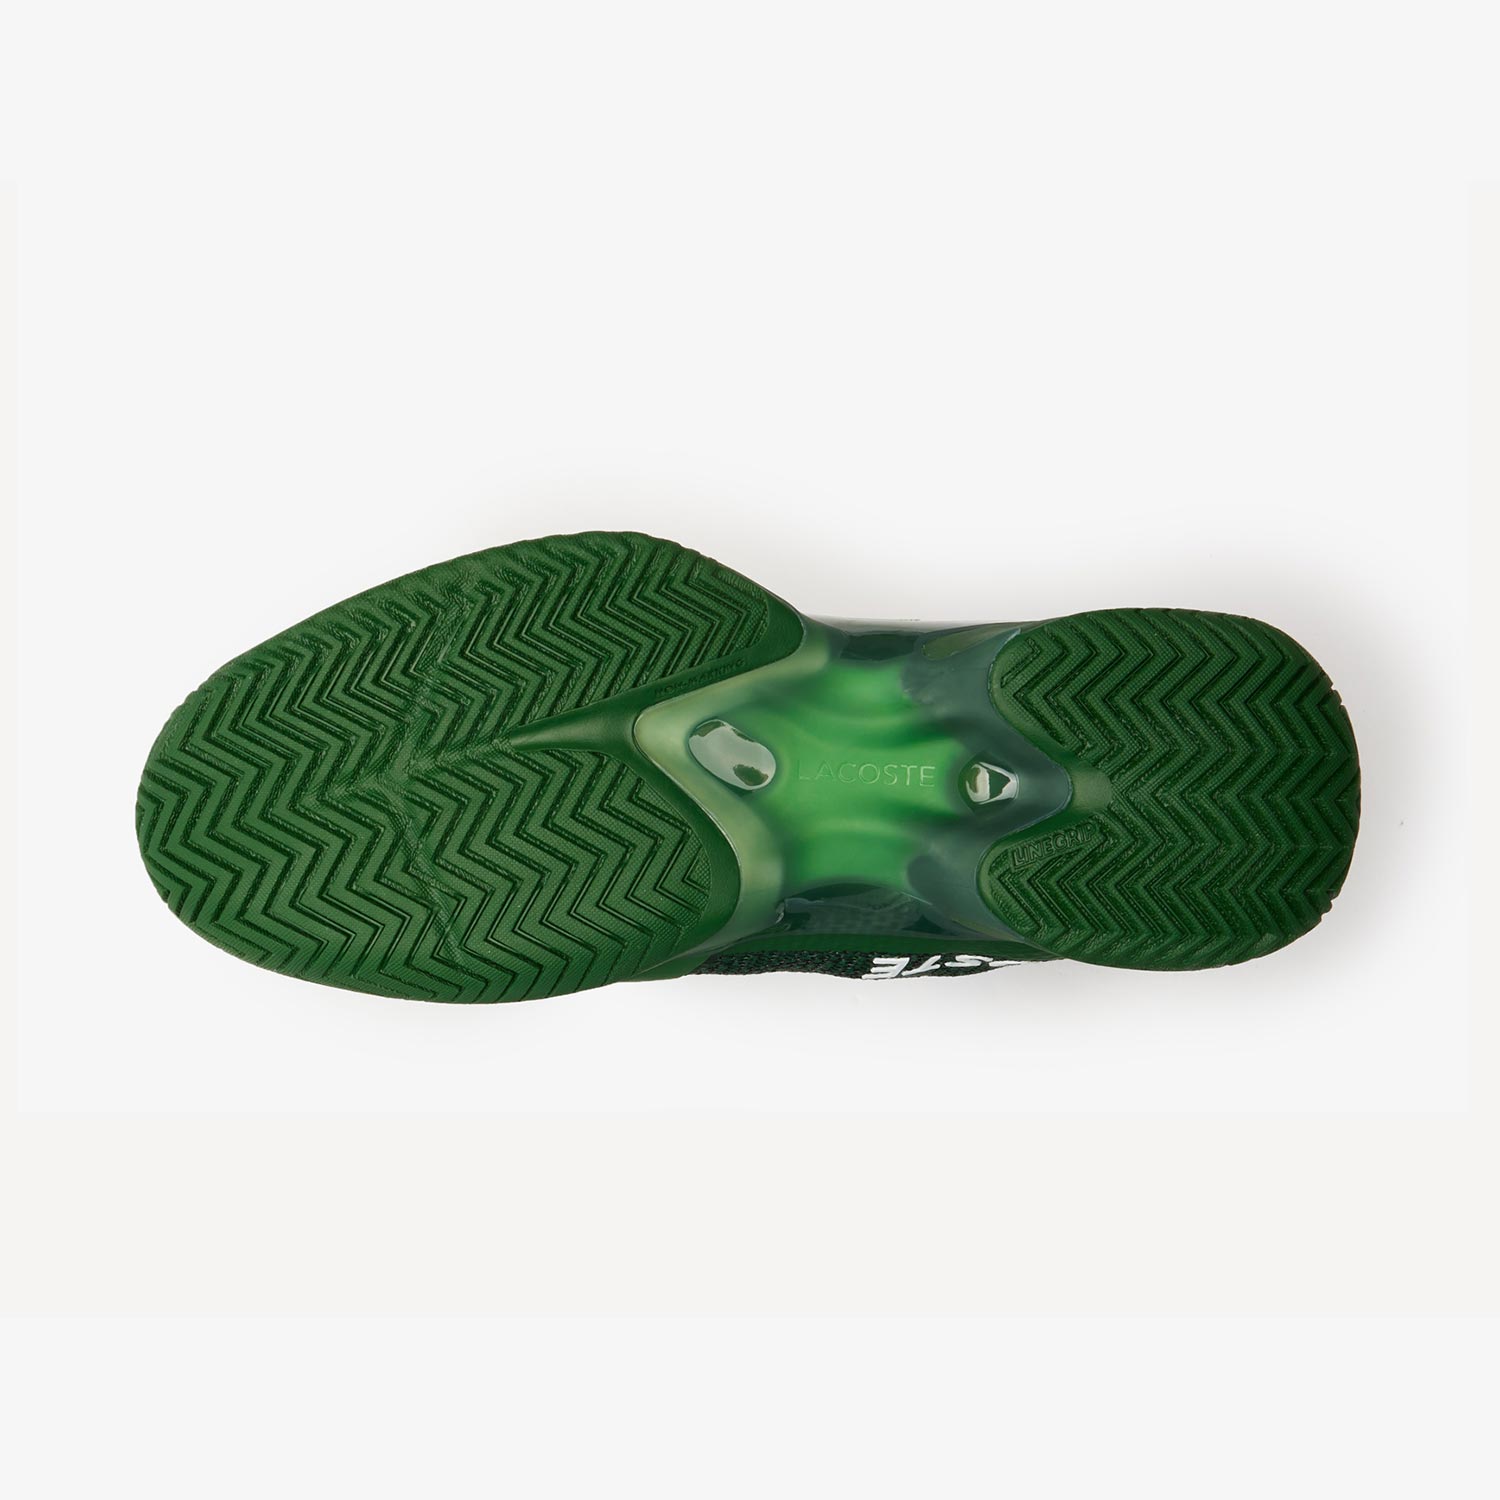 Lacoste AG-LT23 Ultra Men's Tennis Shoes - Green (2)